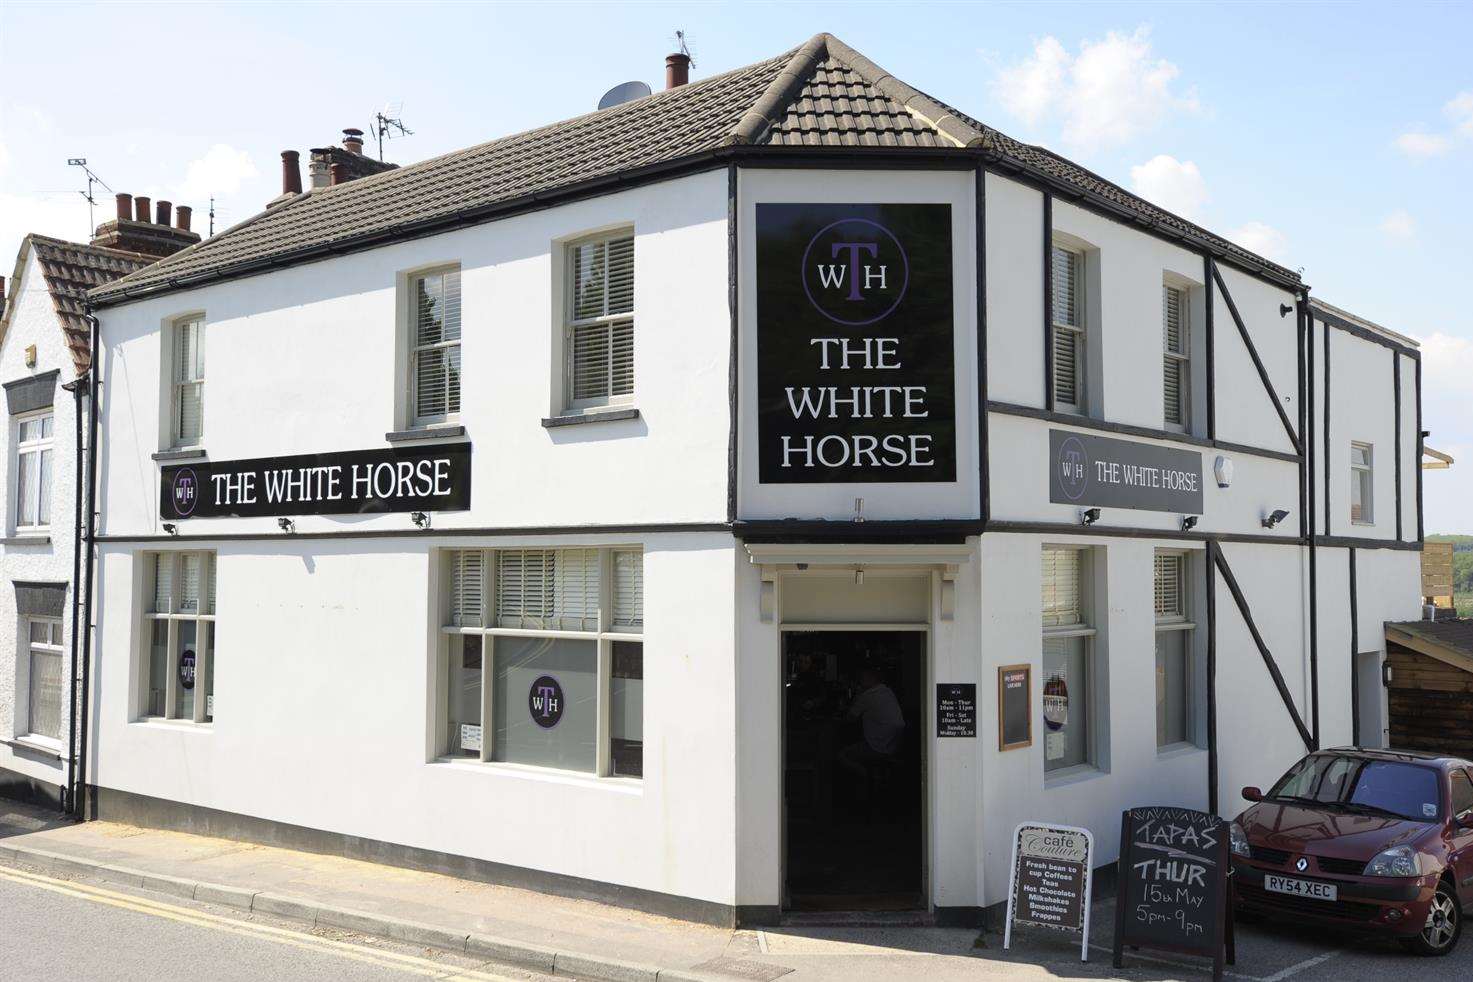 The White Horse pub in Borstal